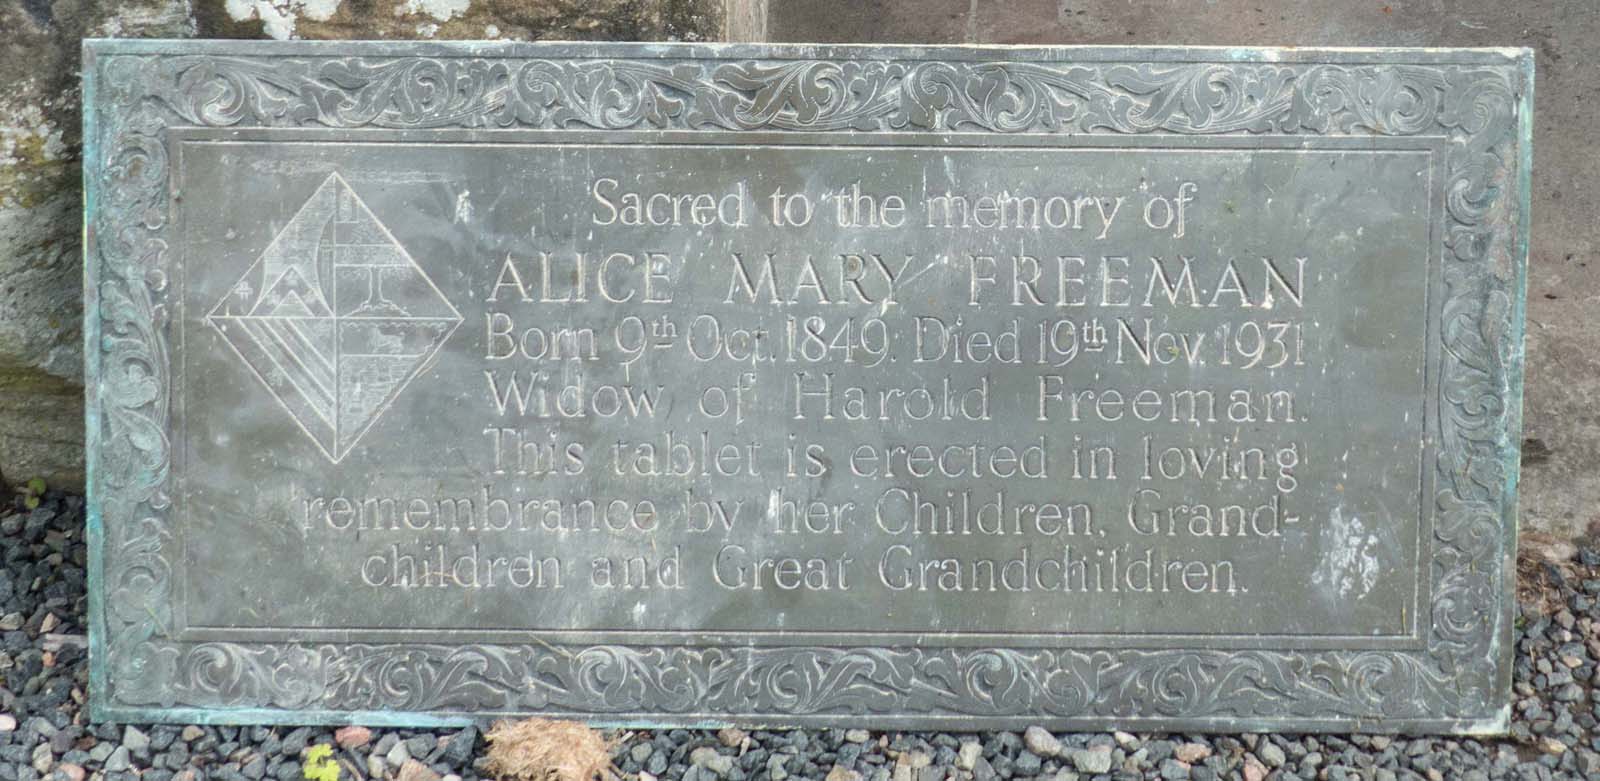 Plaque in memory of Alice  Mary Freeman